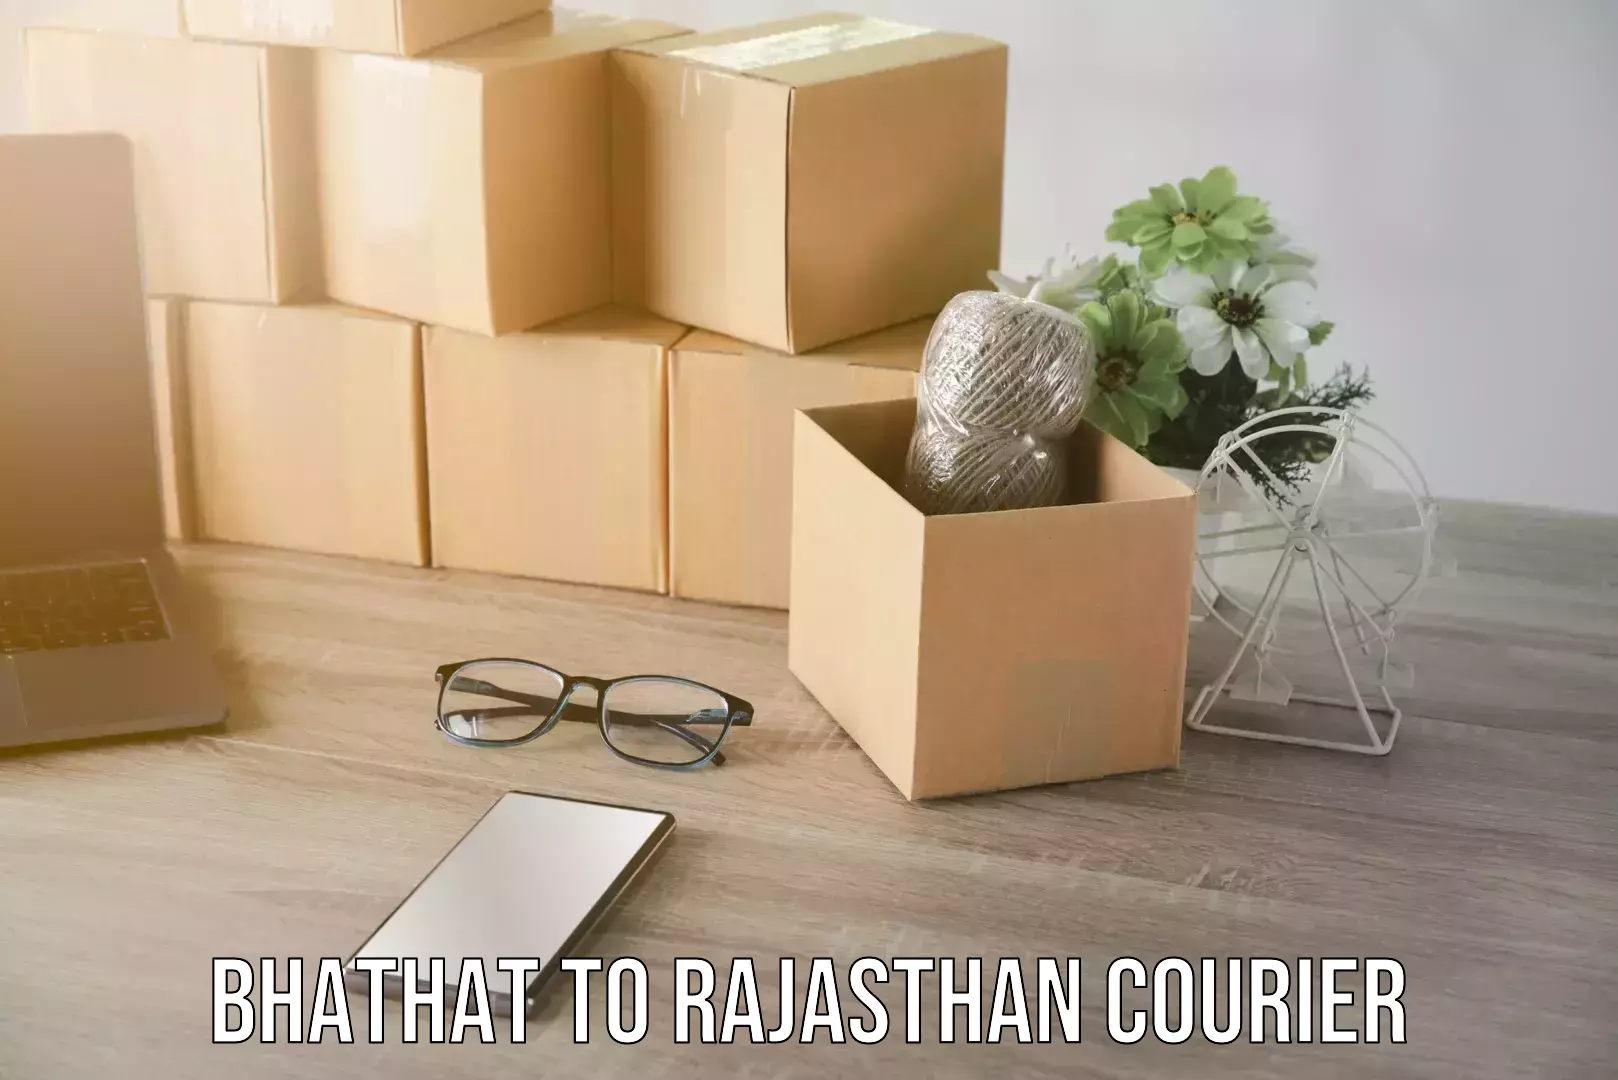 Logistics service provider Bhathat to Rajasthan